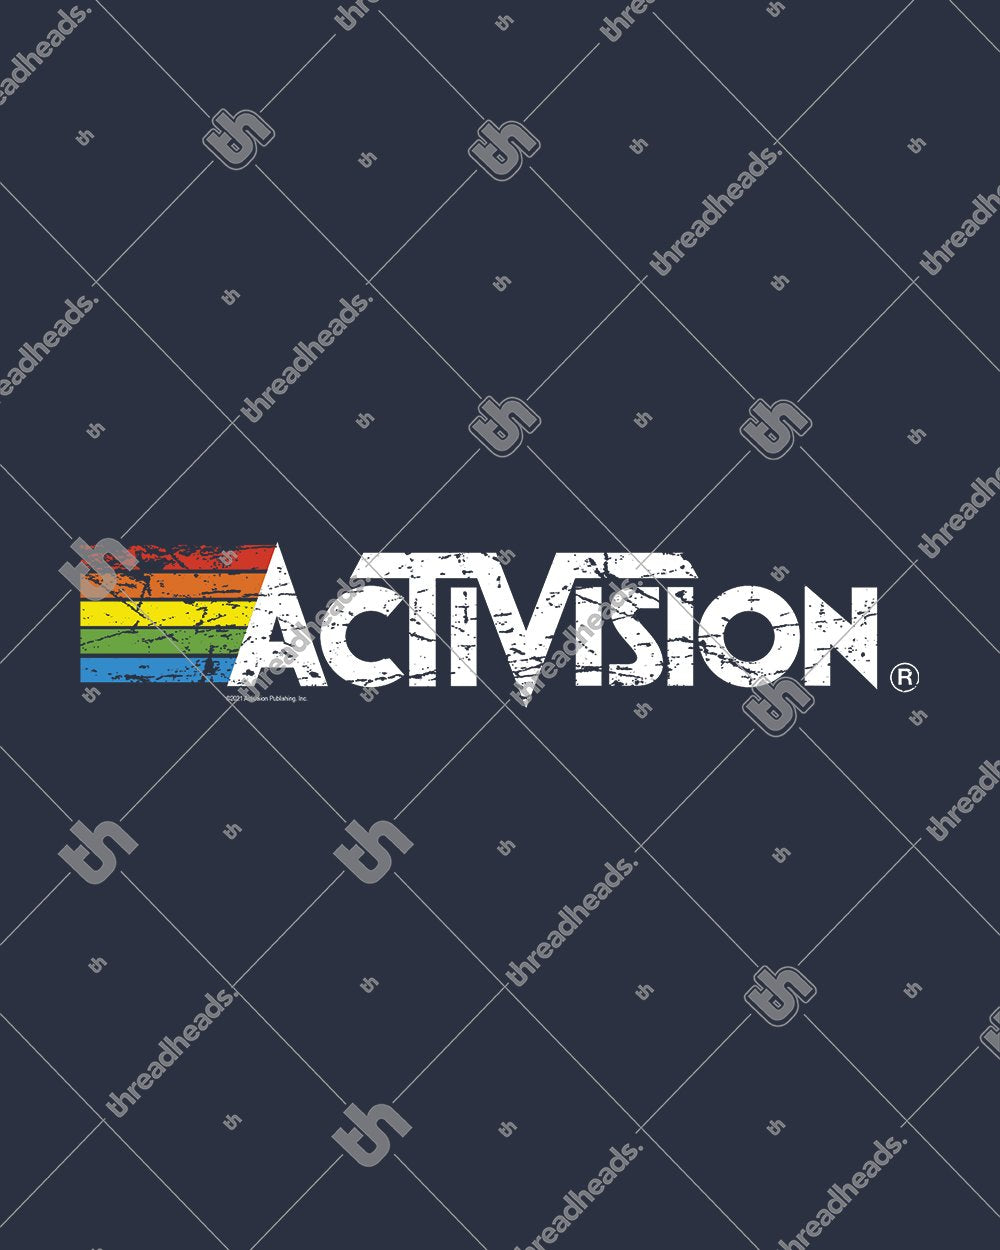 Activision Logo Distressed Hoodie Australia Online #colour_navy